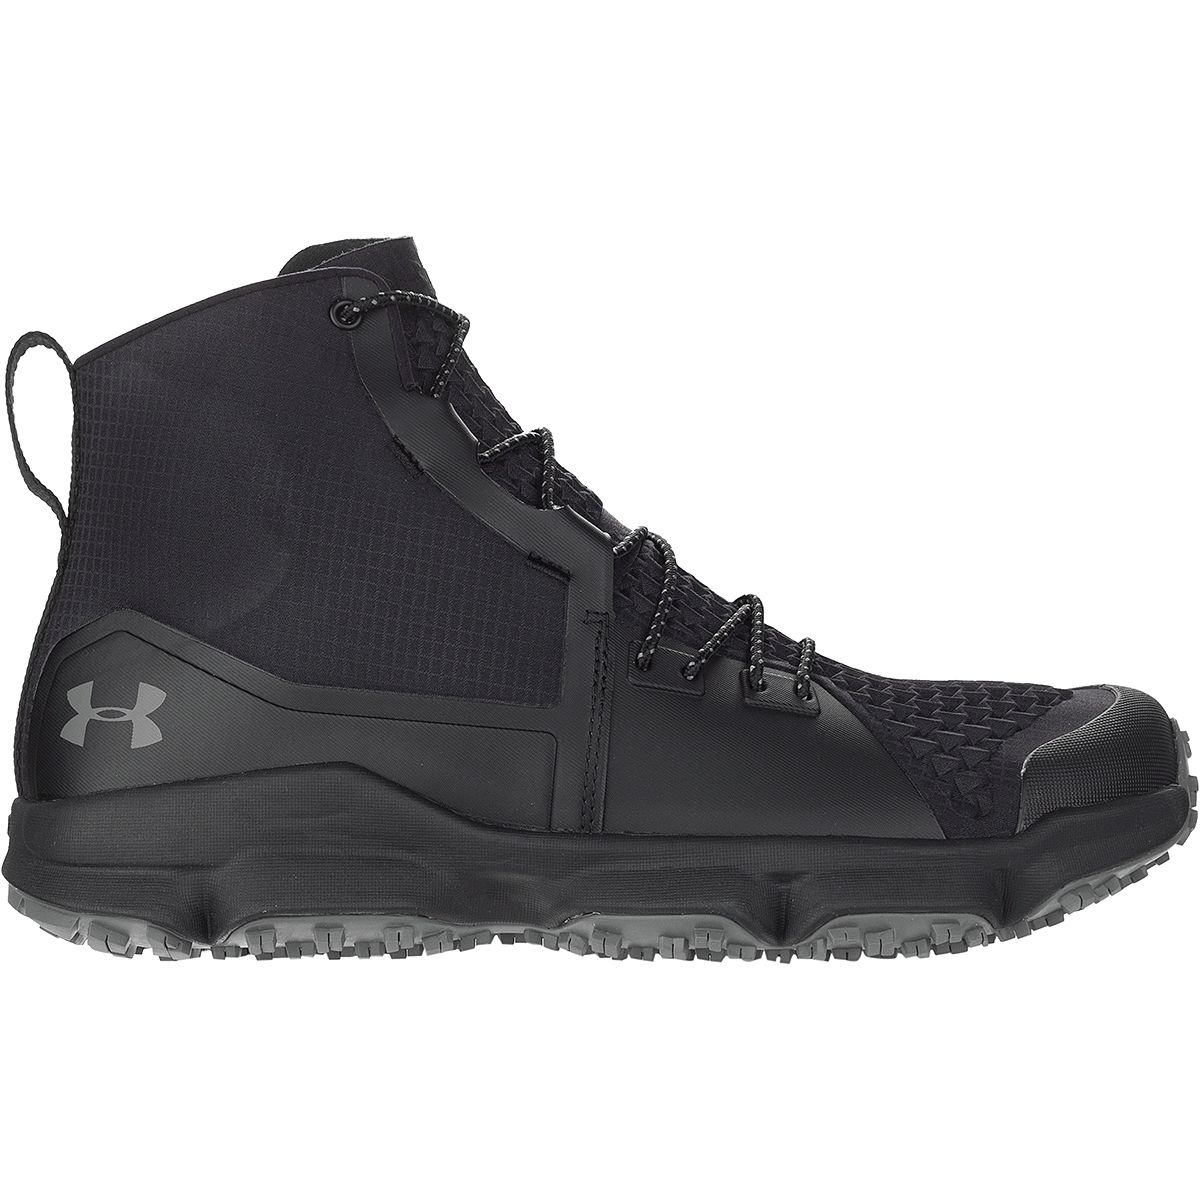 Under Armour Speedfit 2.0 Hiking Boot - Men's - Footwear